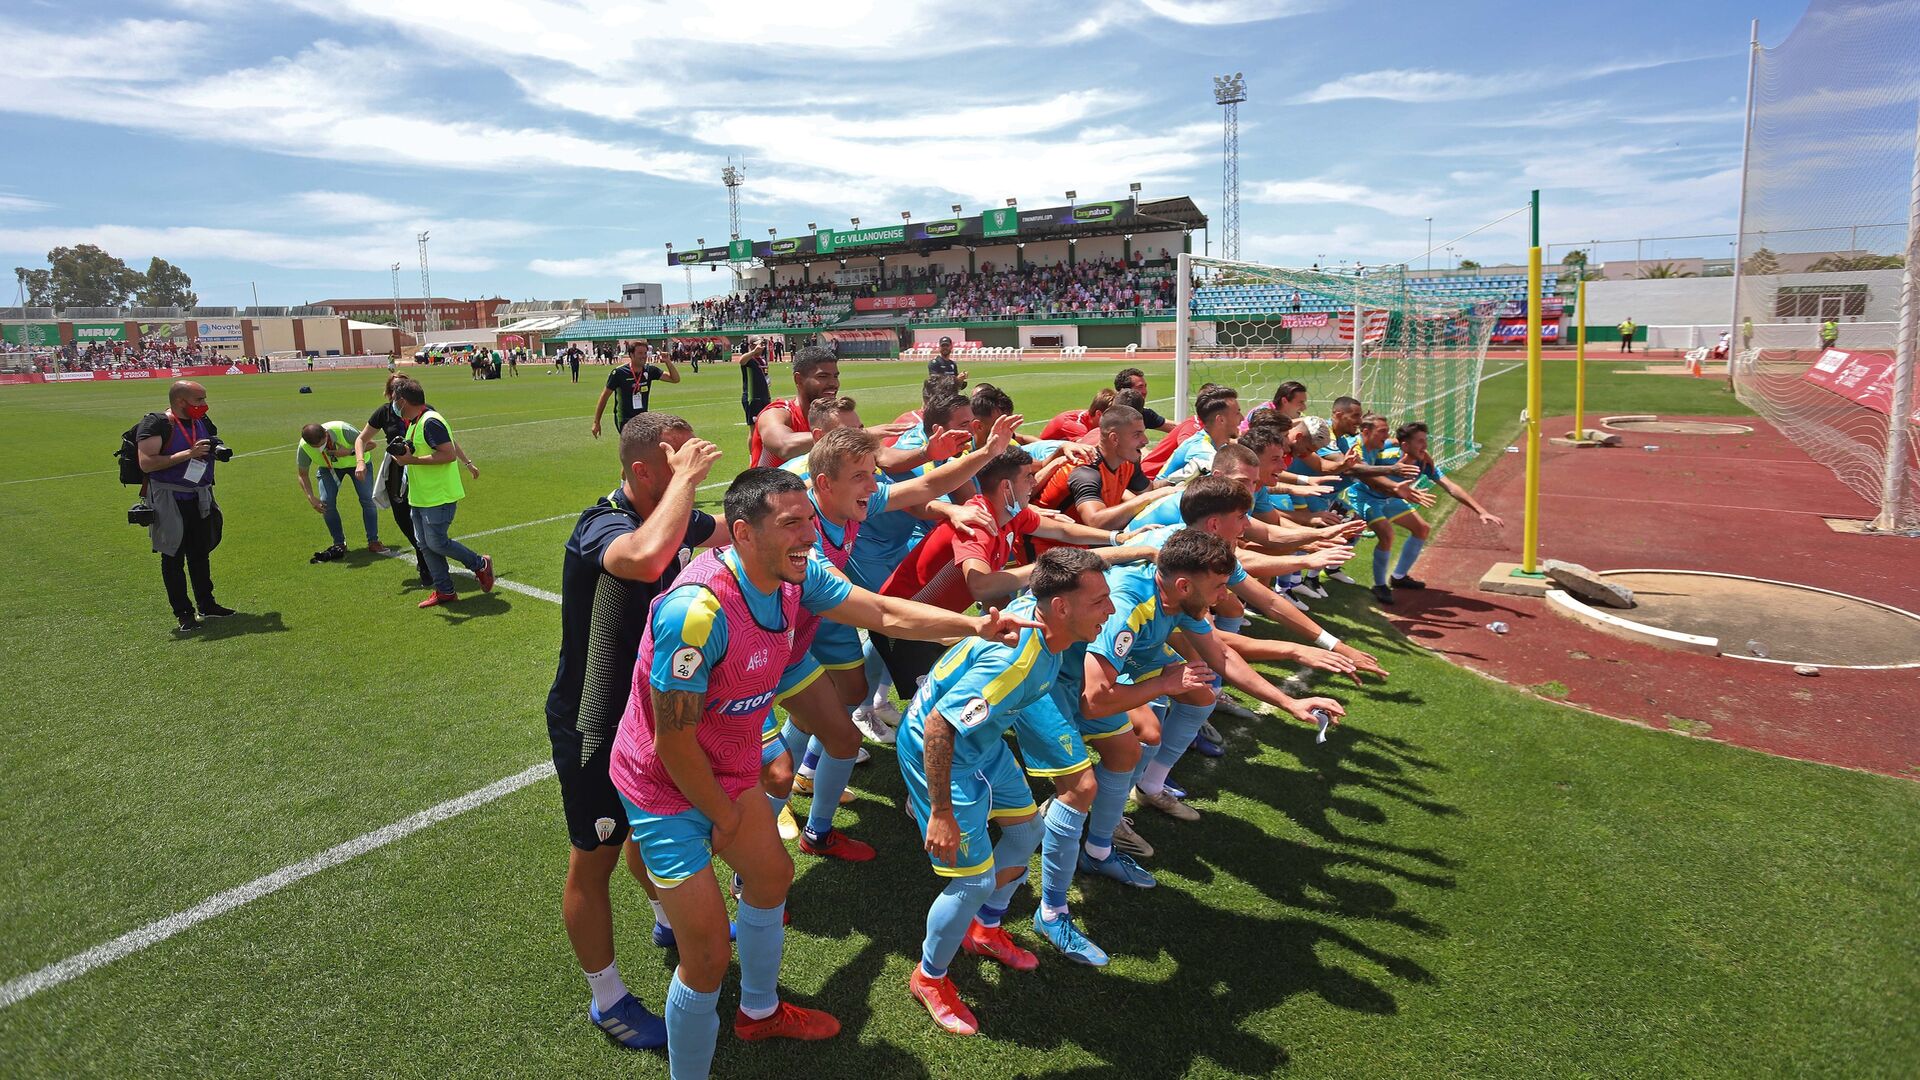 Fotos de la celebraci&oacute;n del Algeciras CF en Villanueva de la Serena